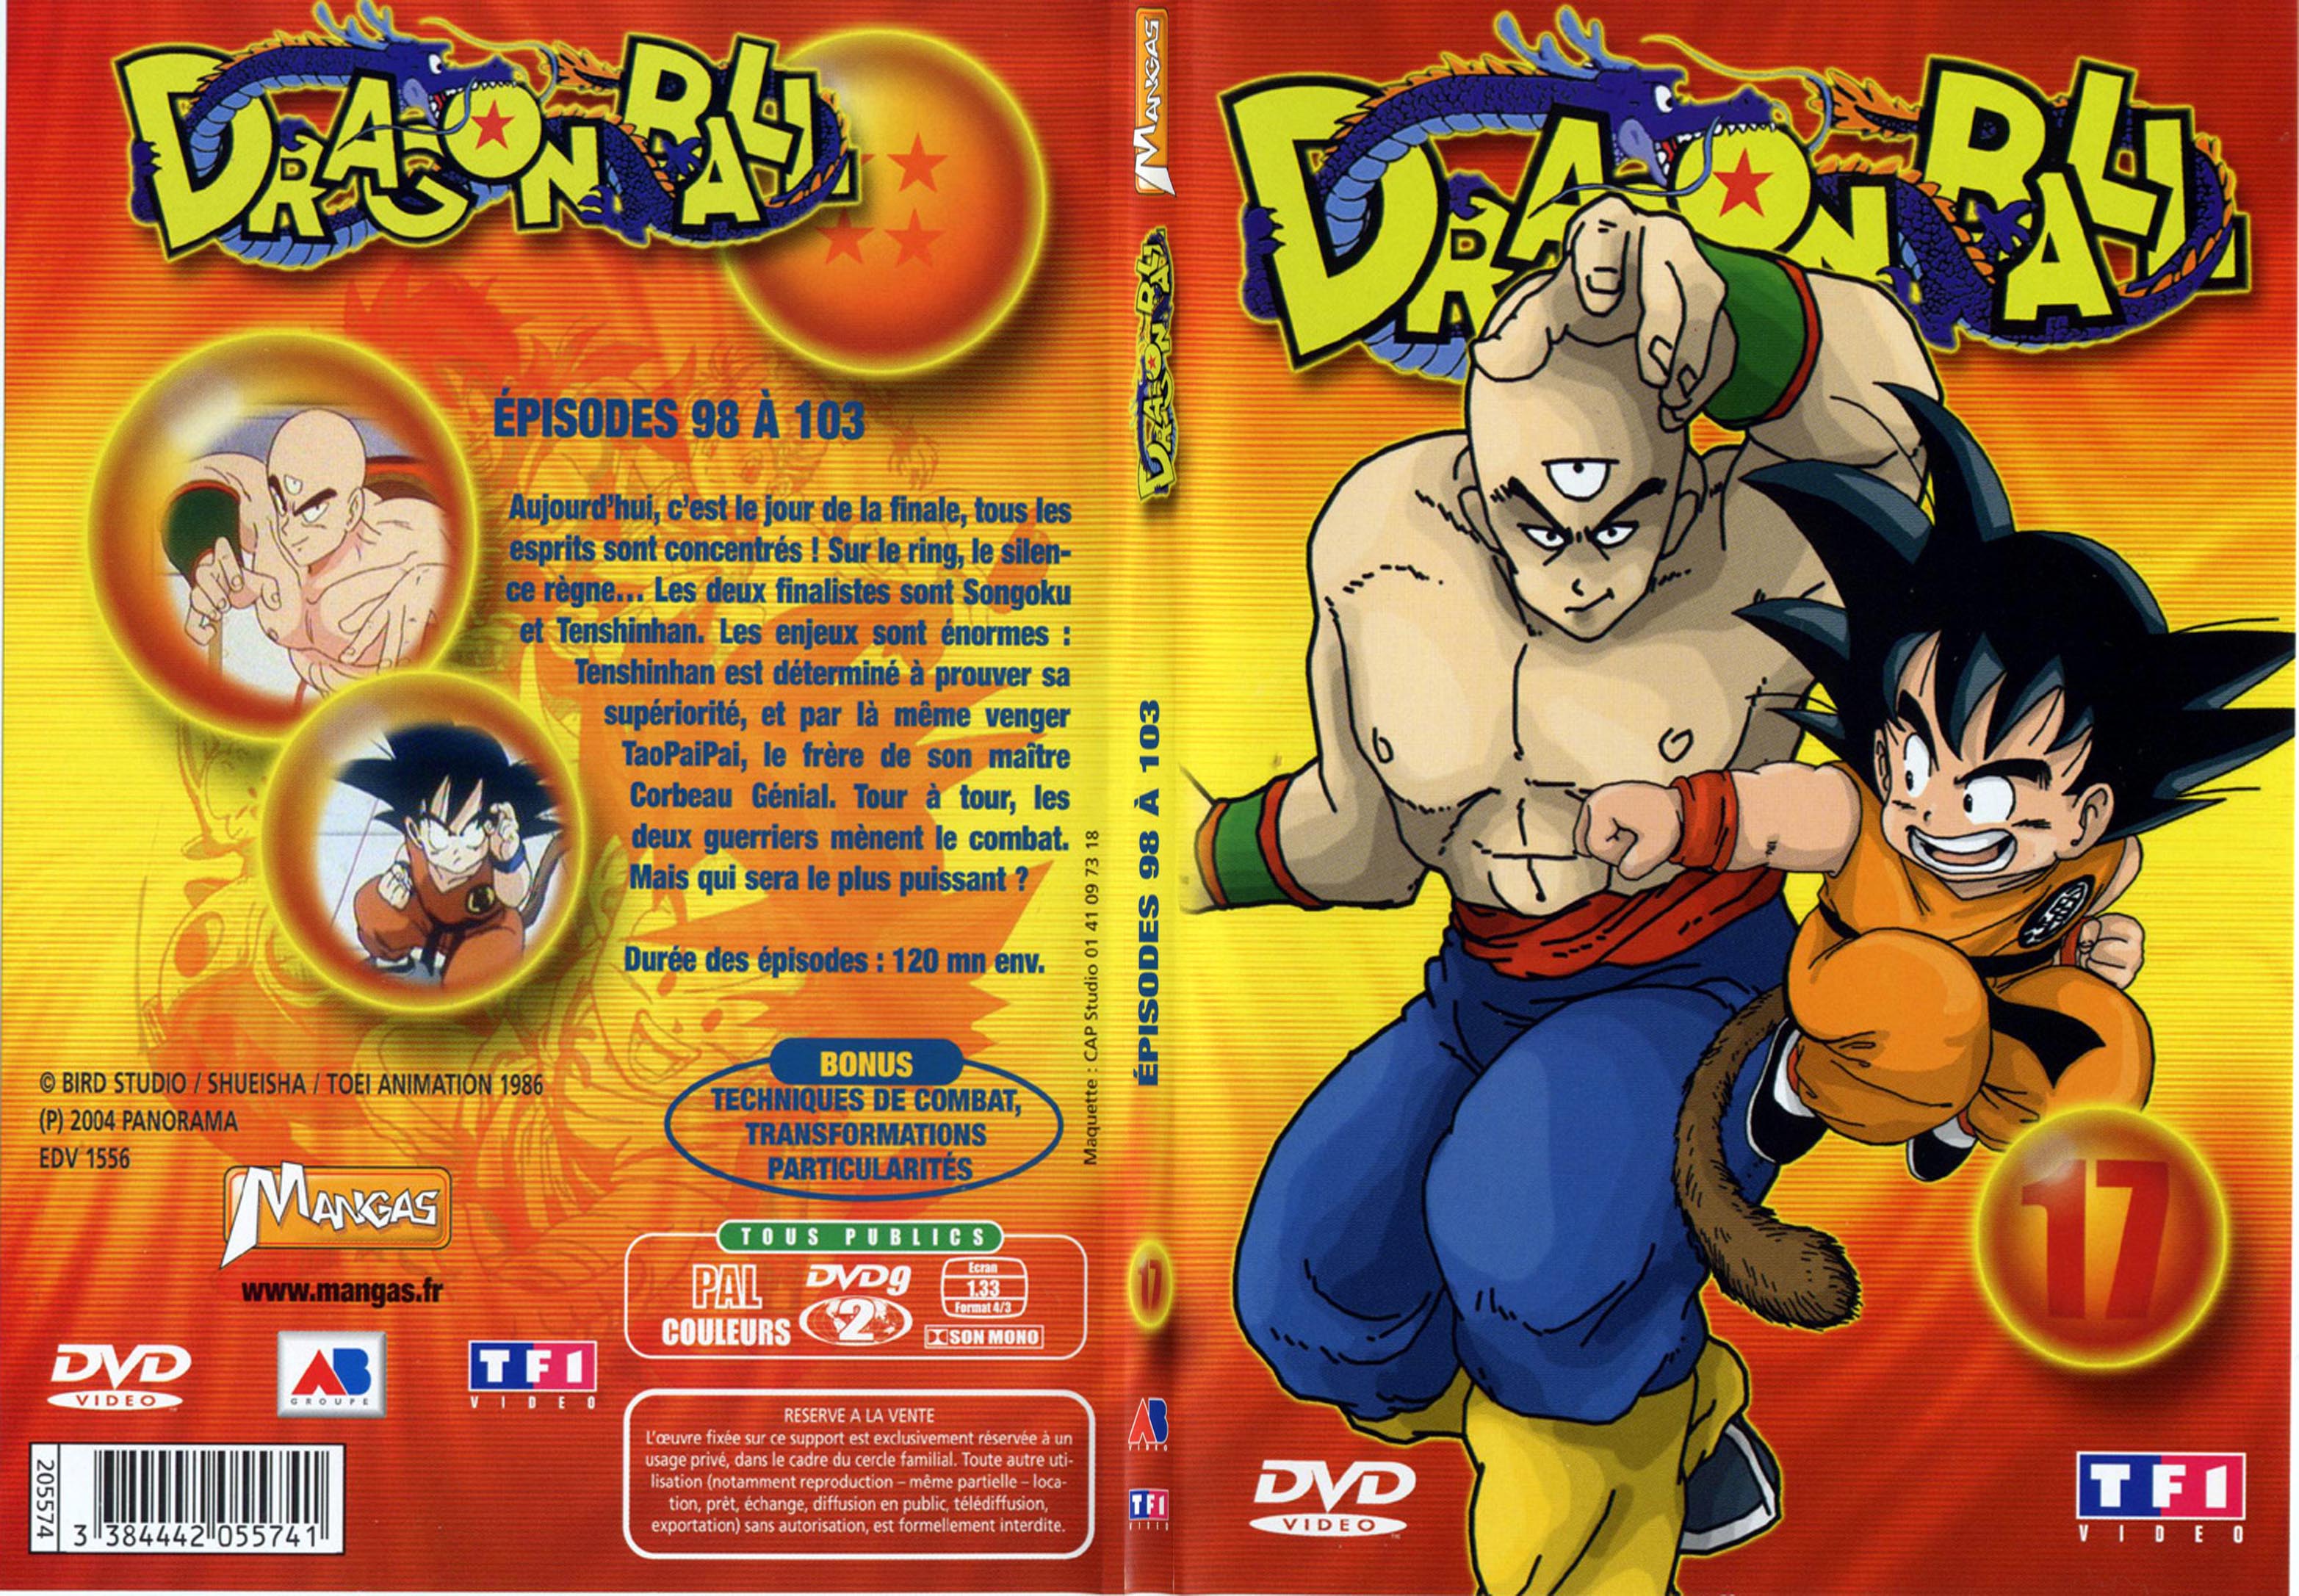 Jaquette DVD Dragon ball vol 17 - SLIM